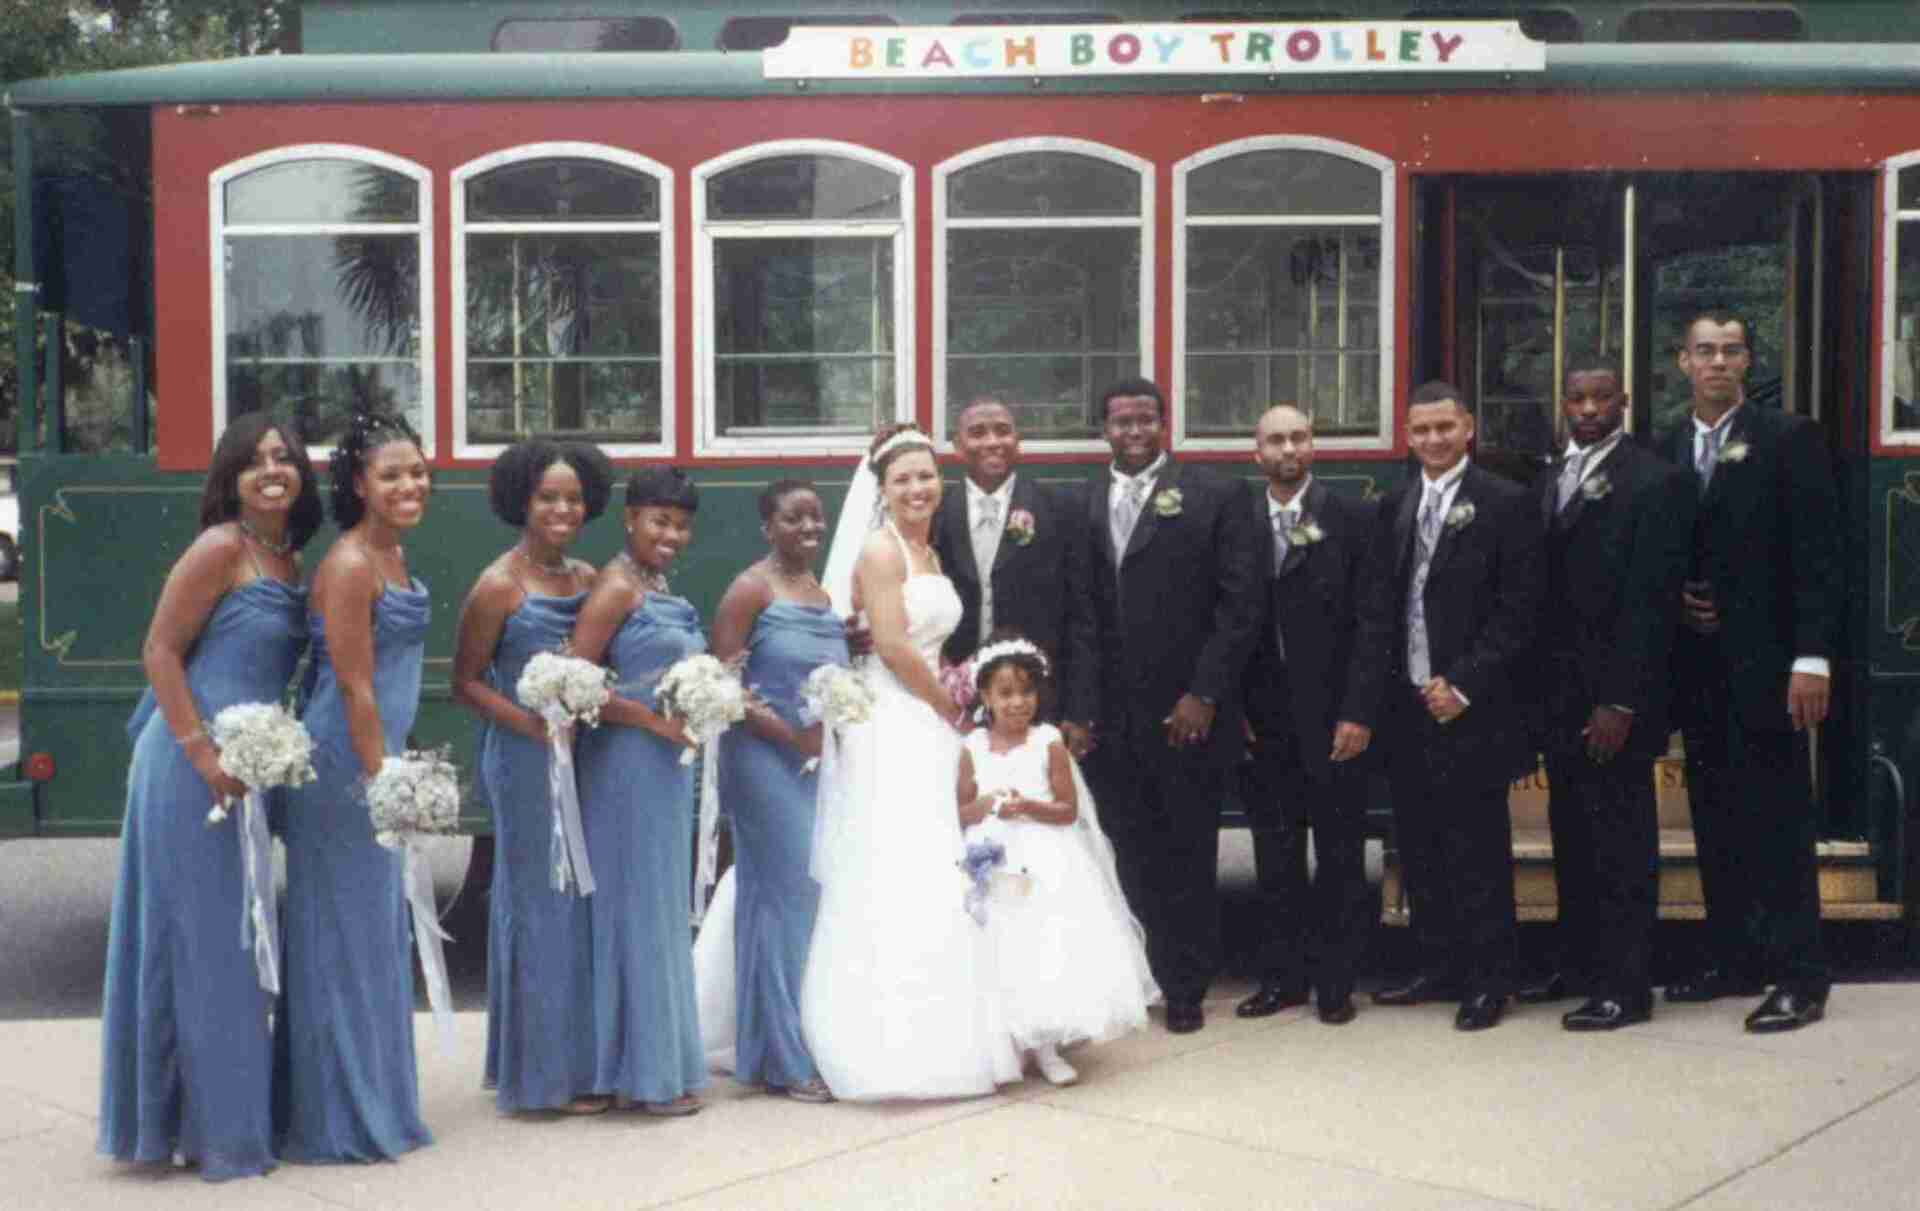 wedding party trolley service